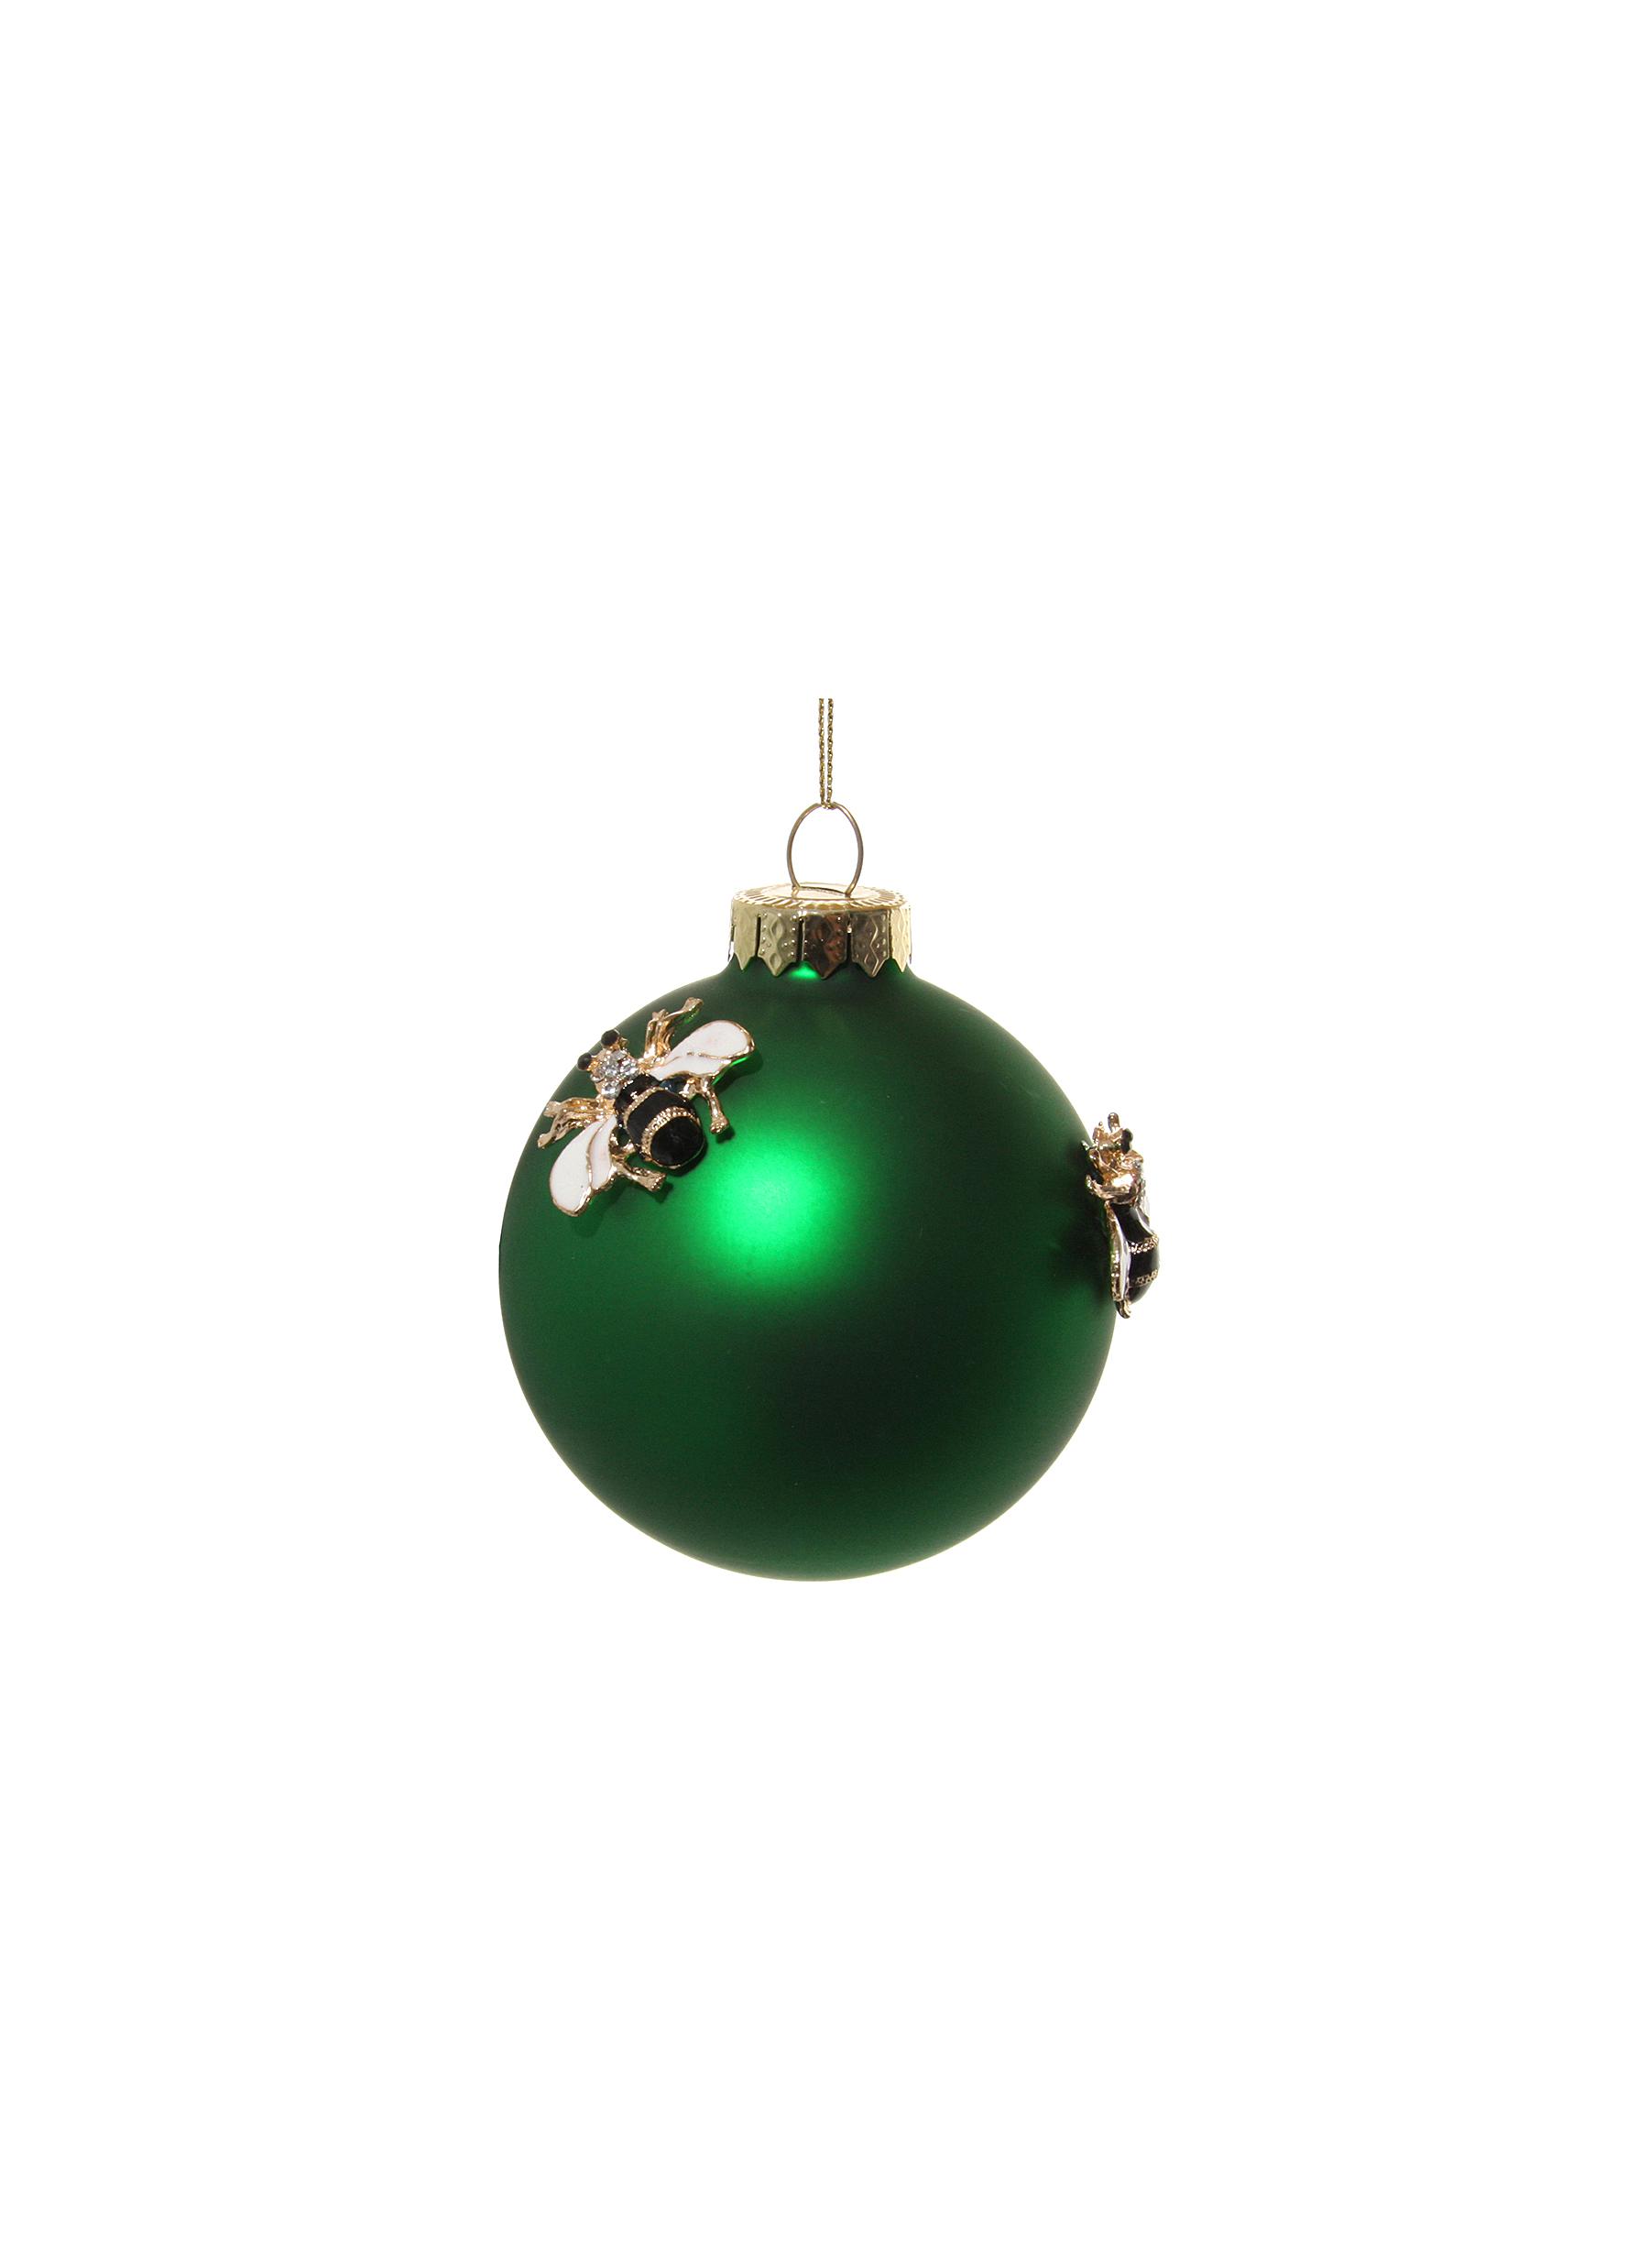 Bees Glass Ball Ornament - Green/Gold